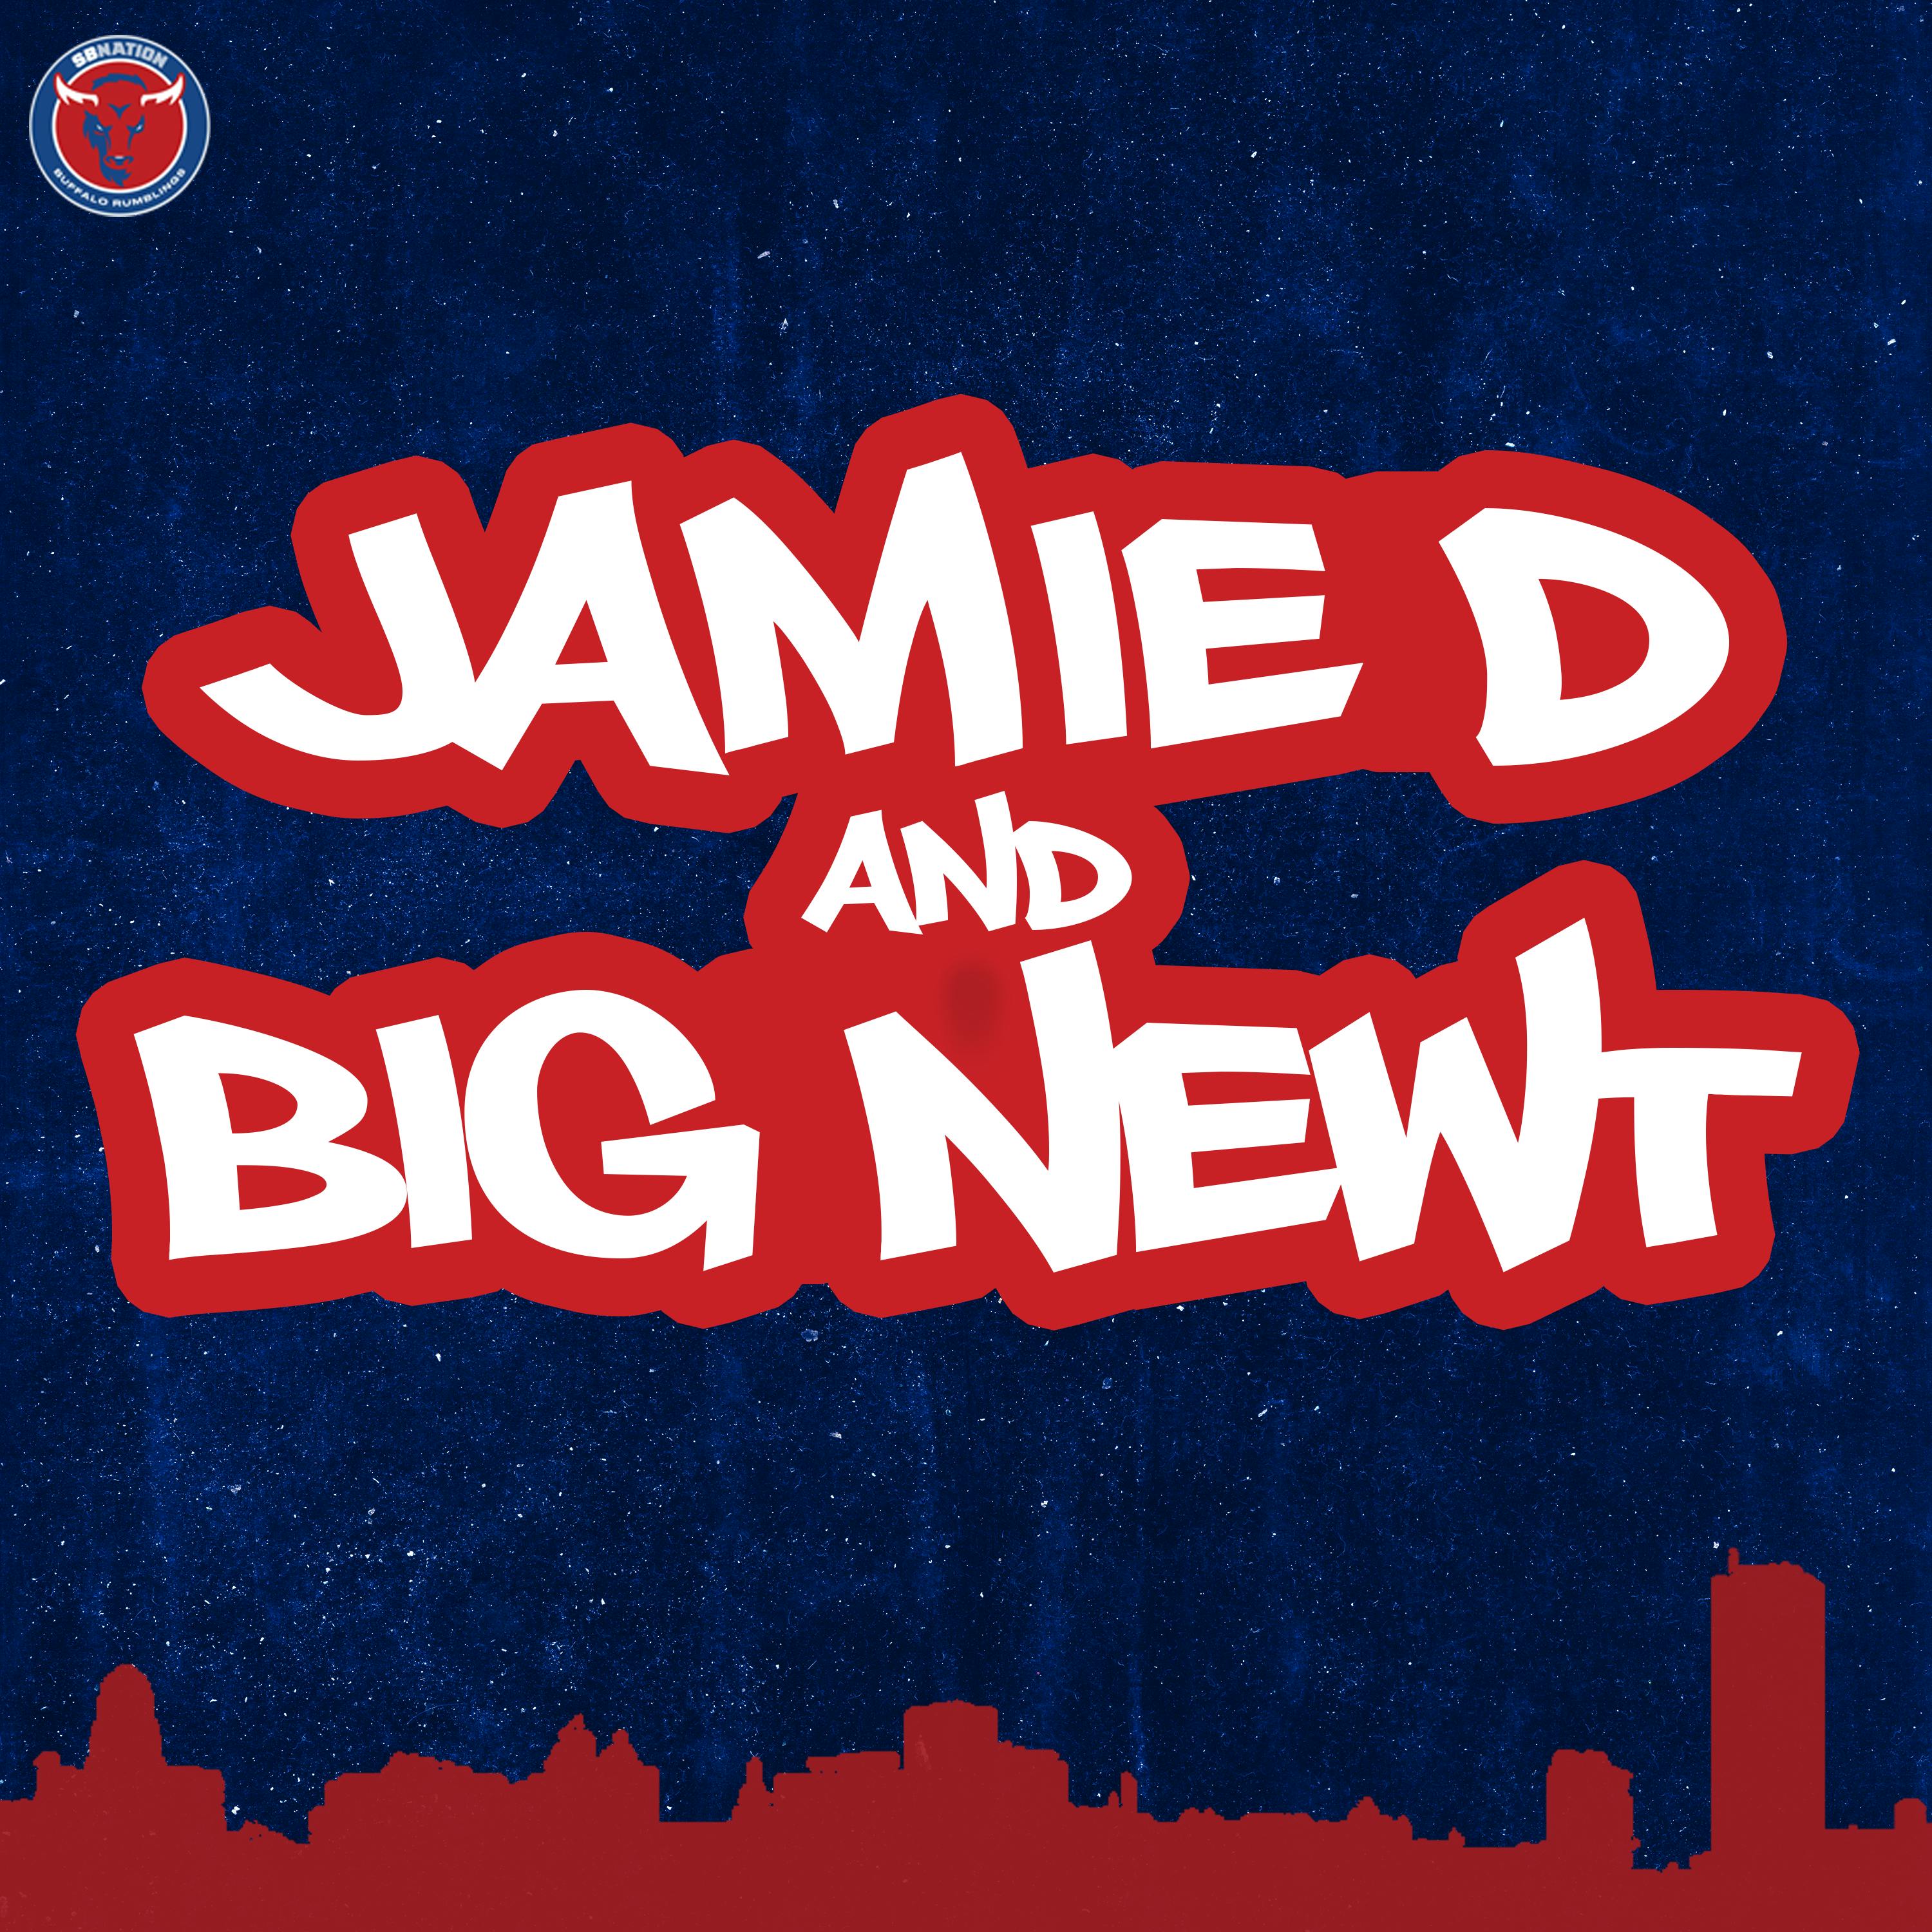 Jamie D & Big Newt: The offseason transition